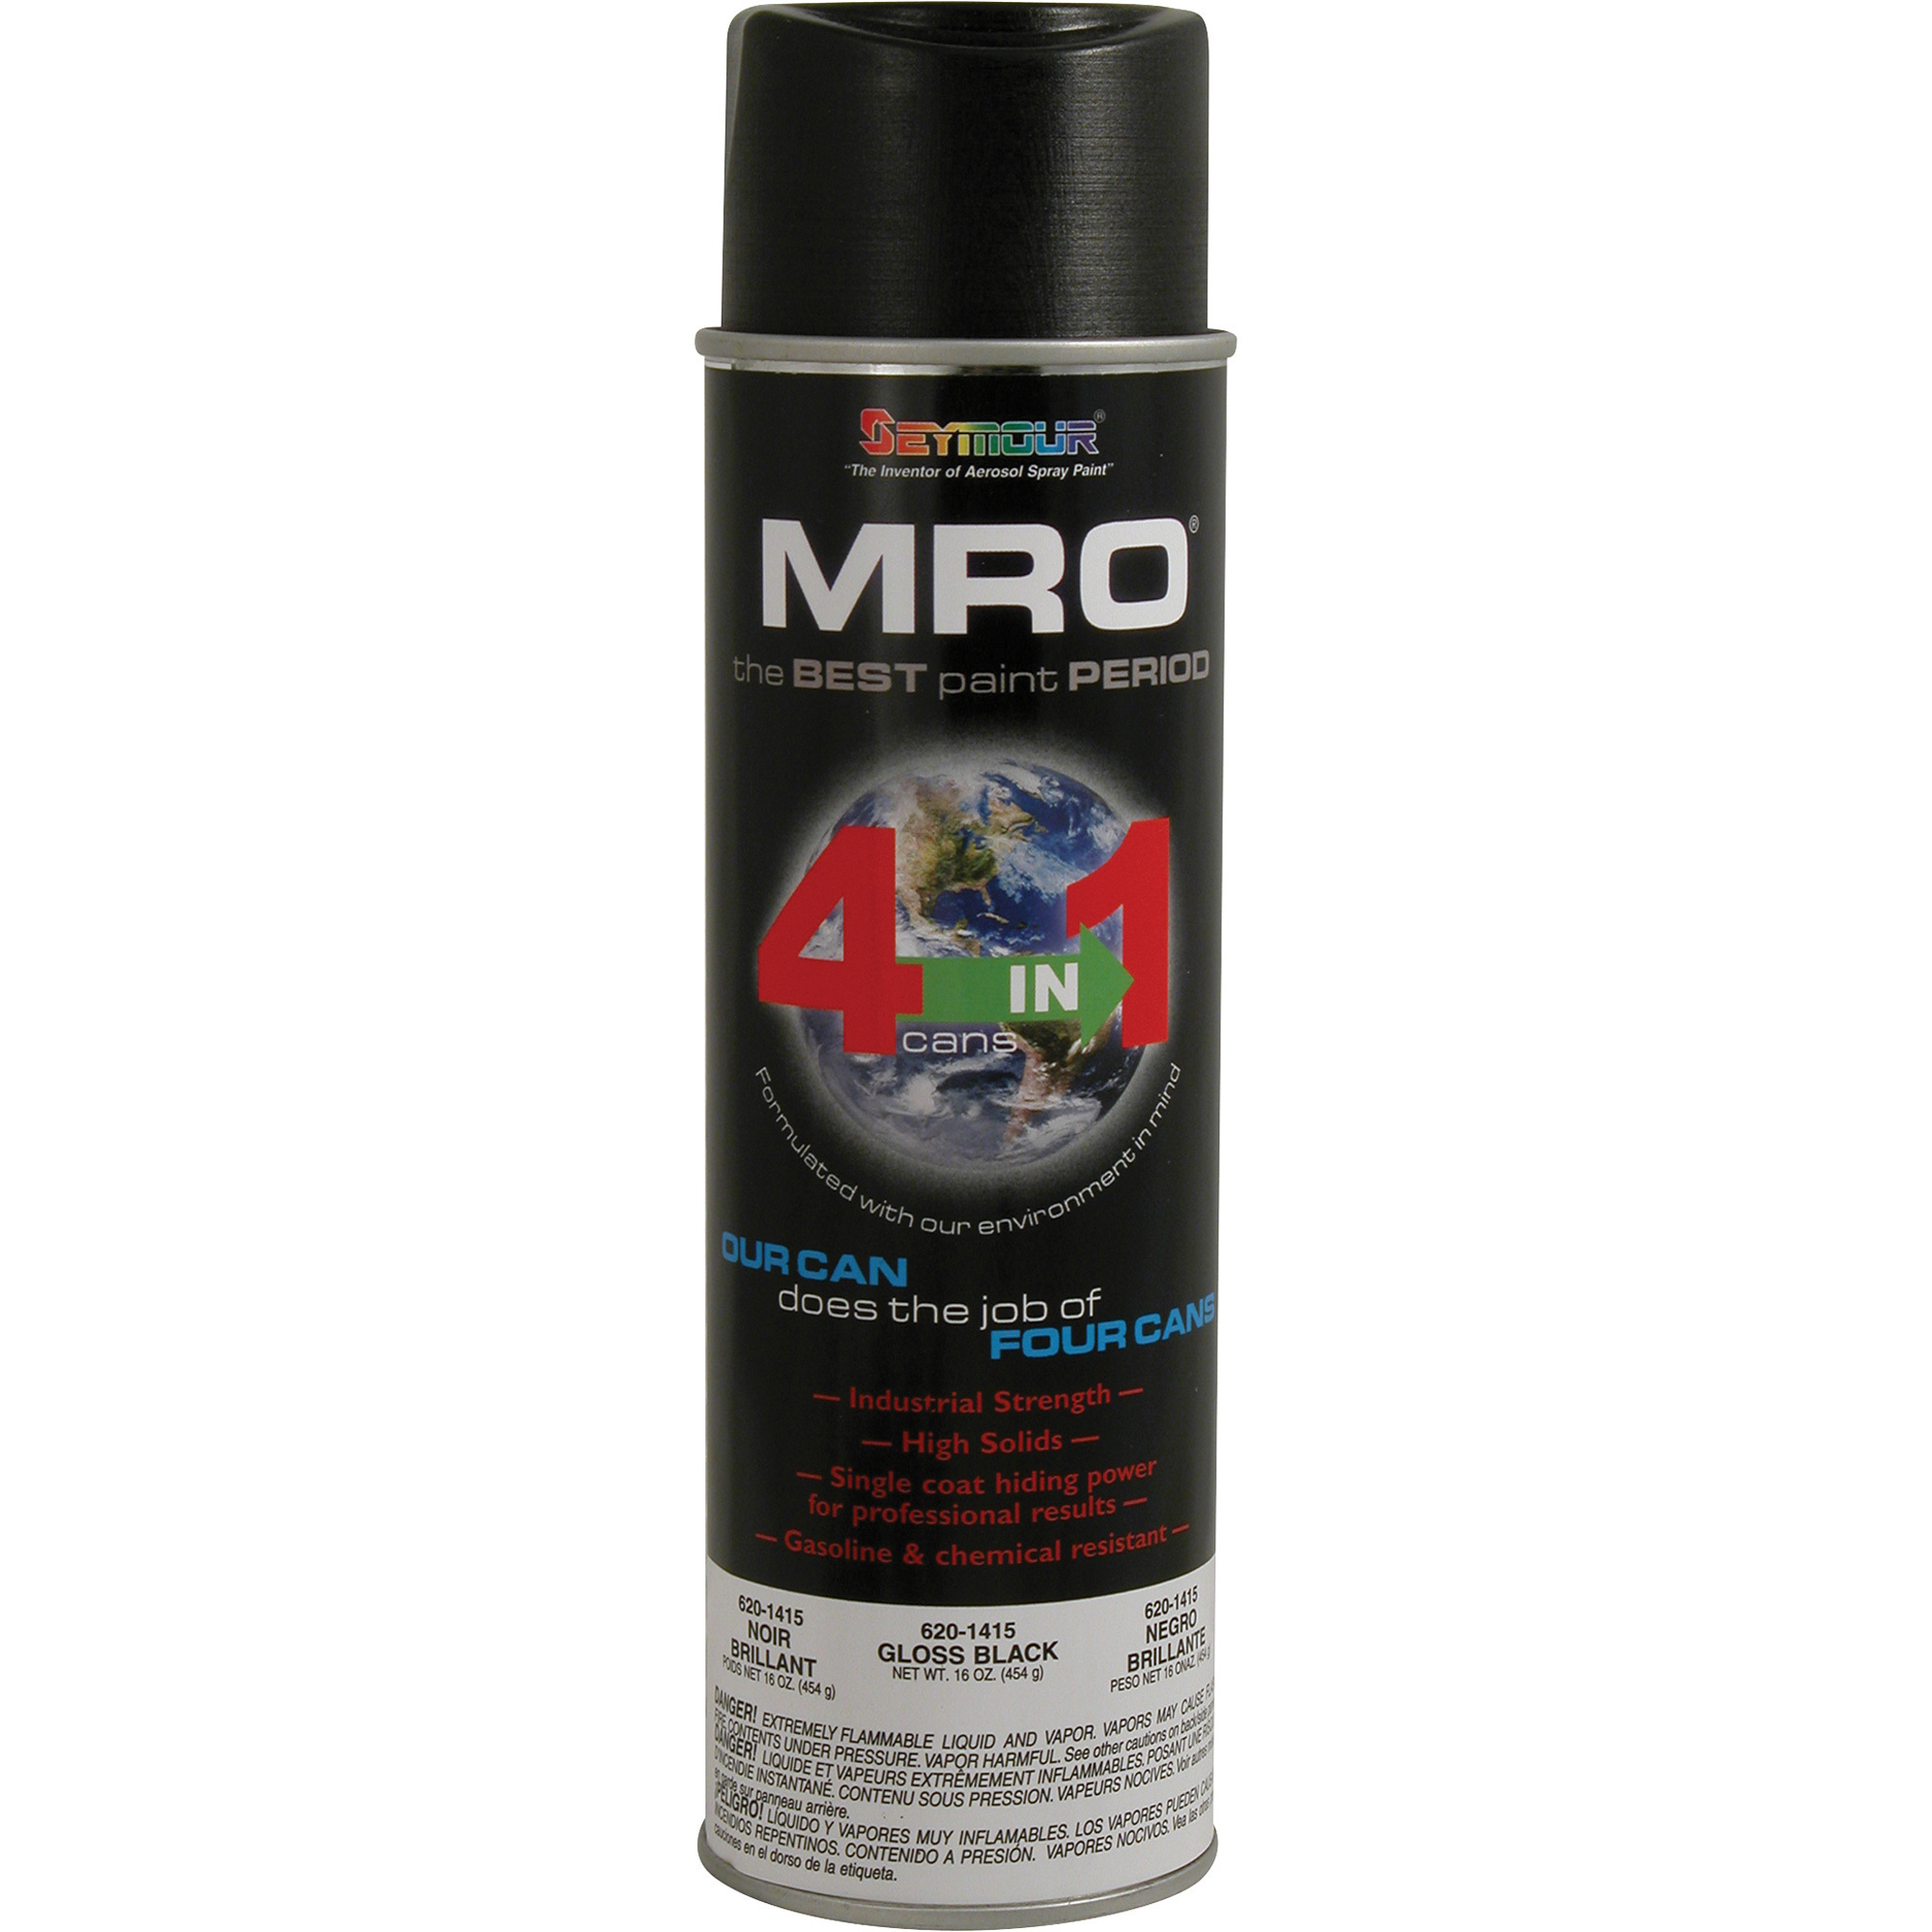 Seymour MRO Spray Paint, Gloss Black, 6ct. Case, 20-Oz. Cans, Model 620-1415 CS